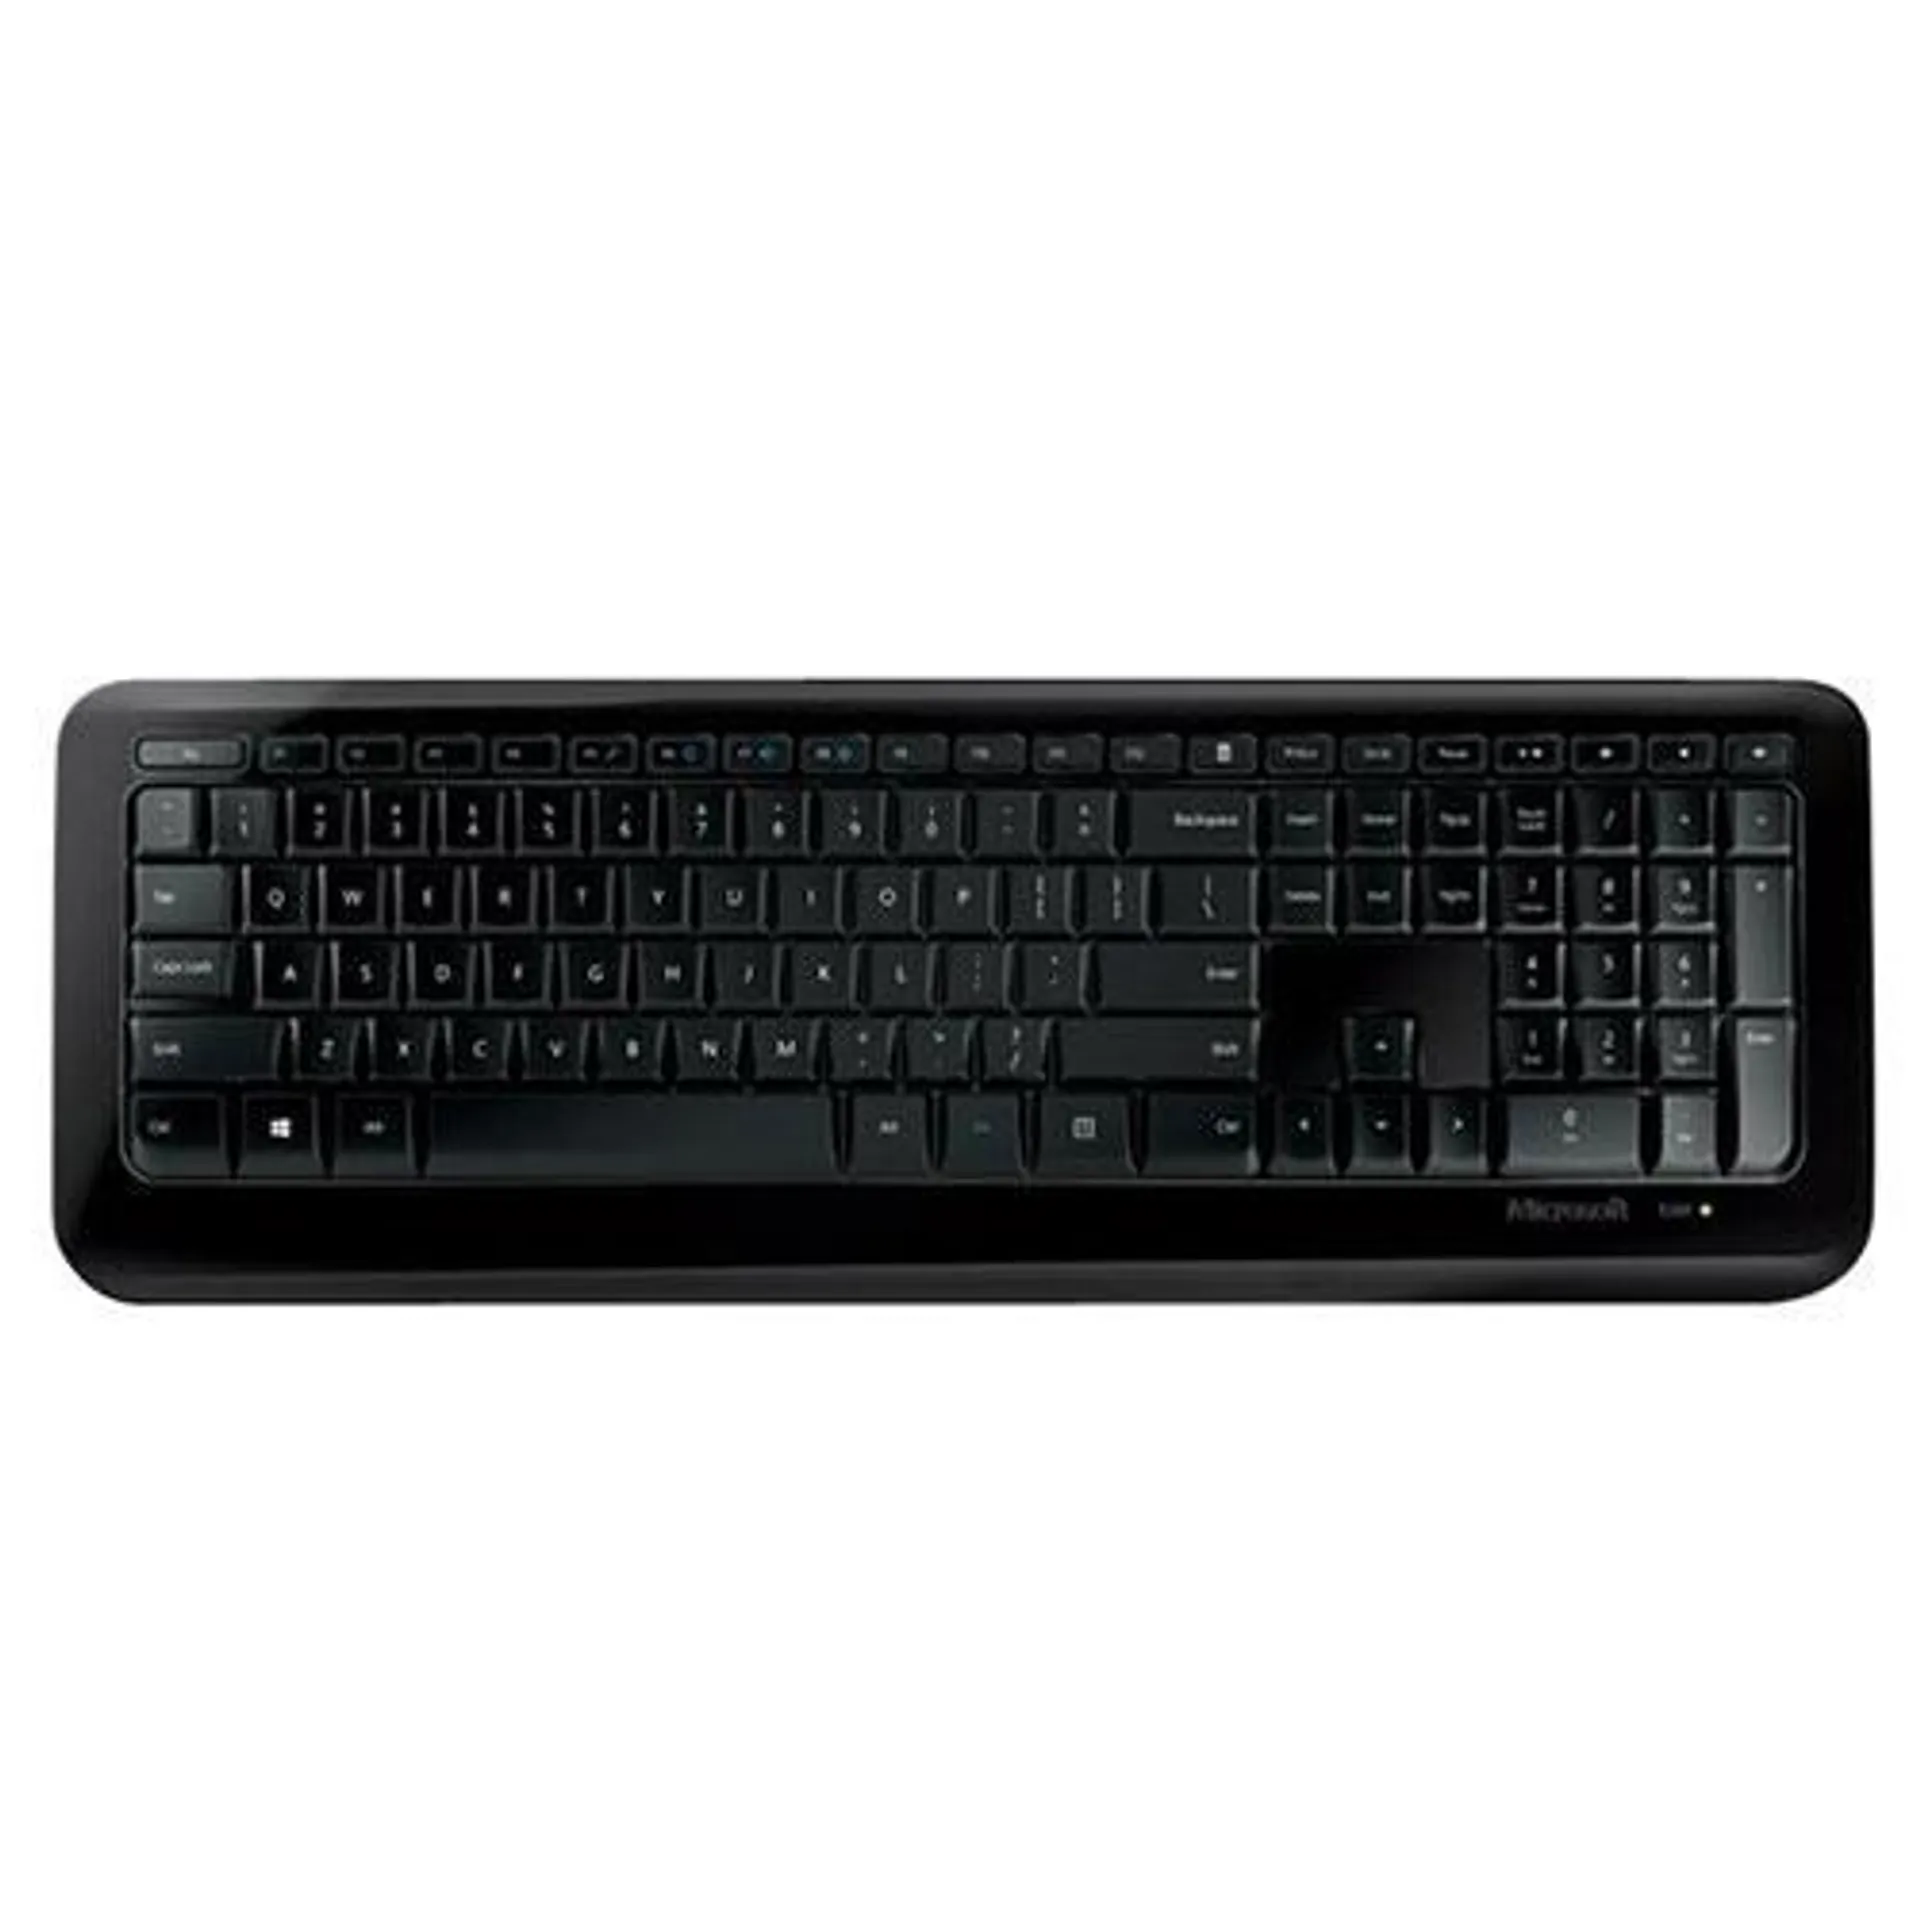 Microsoft Wireless Keyboard 850